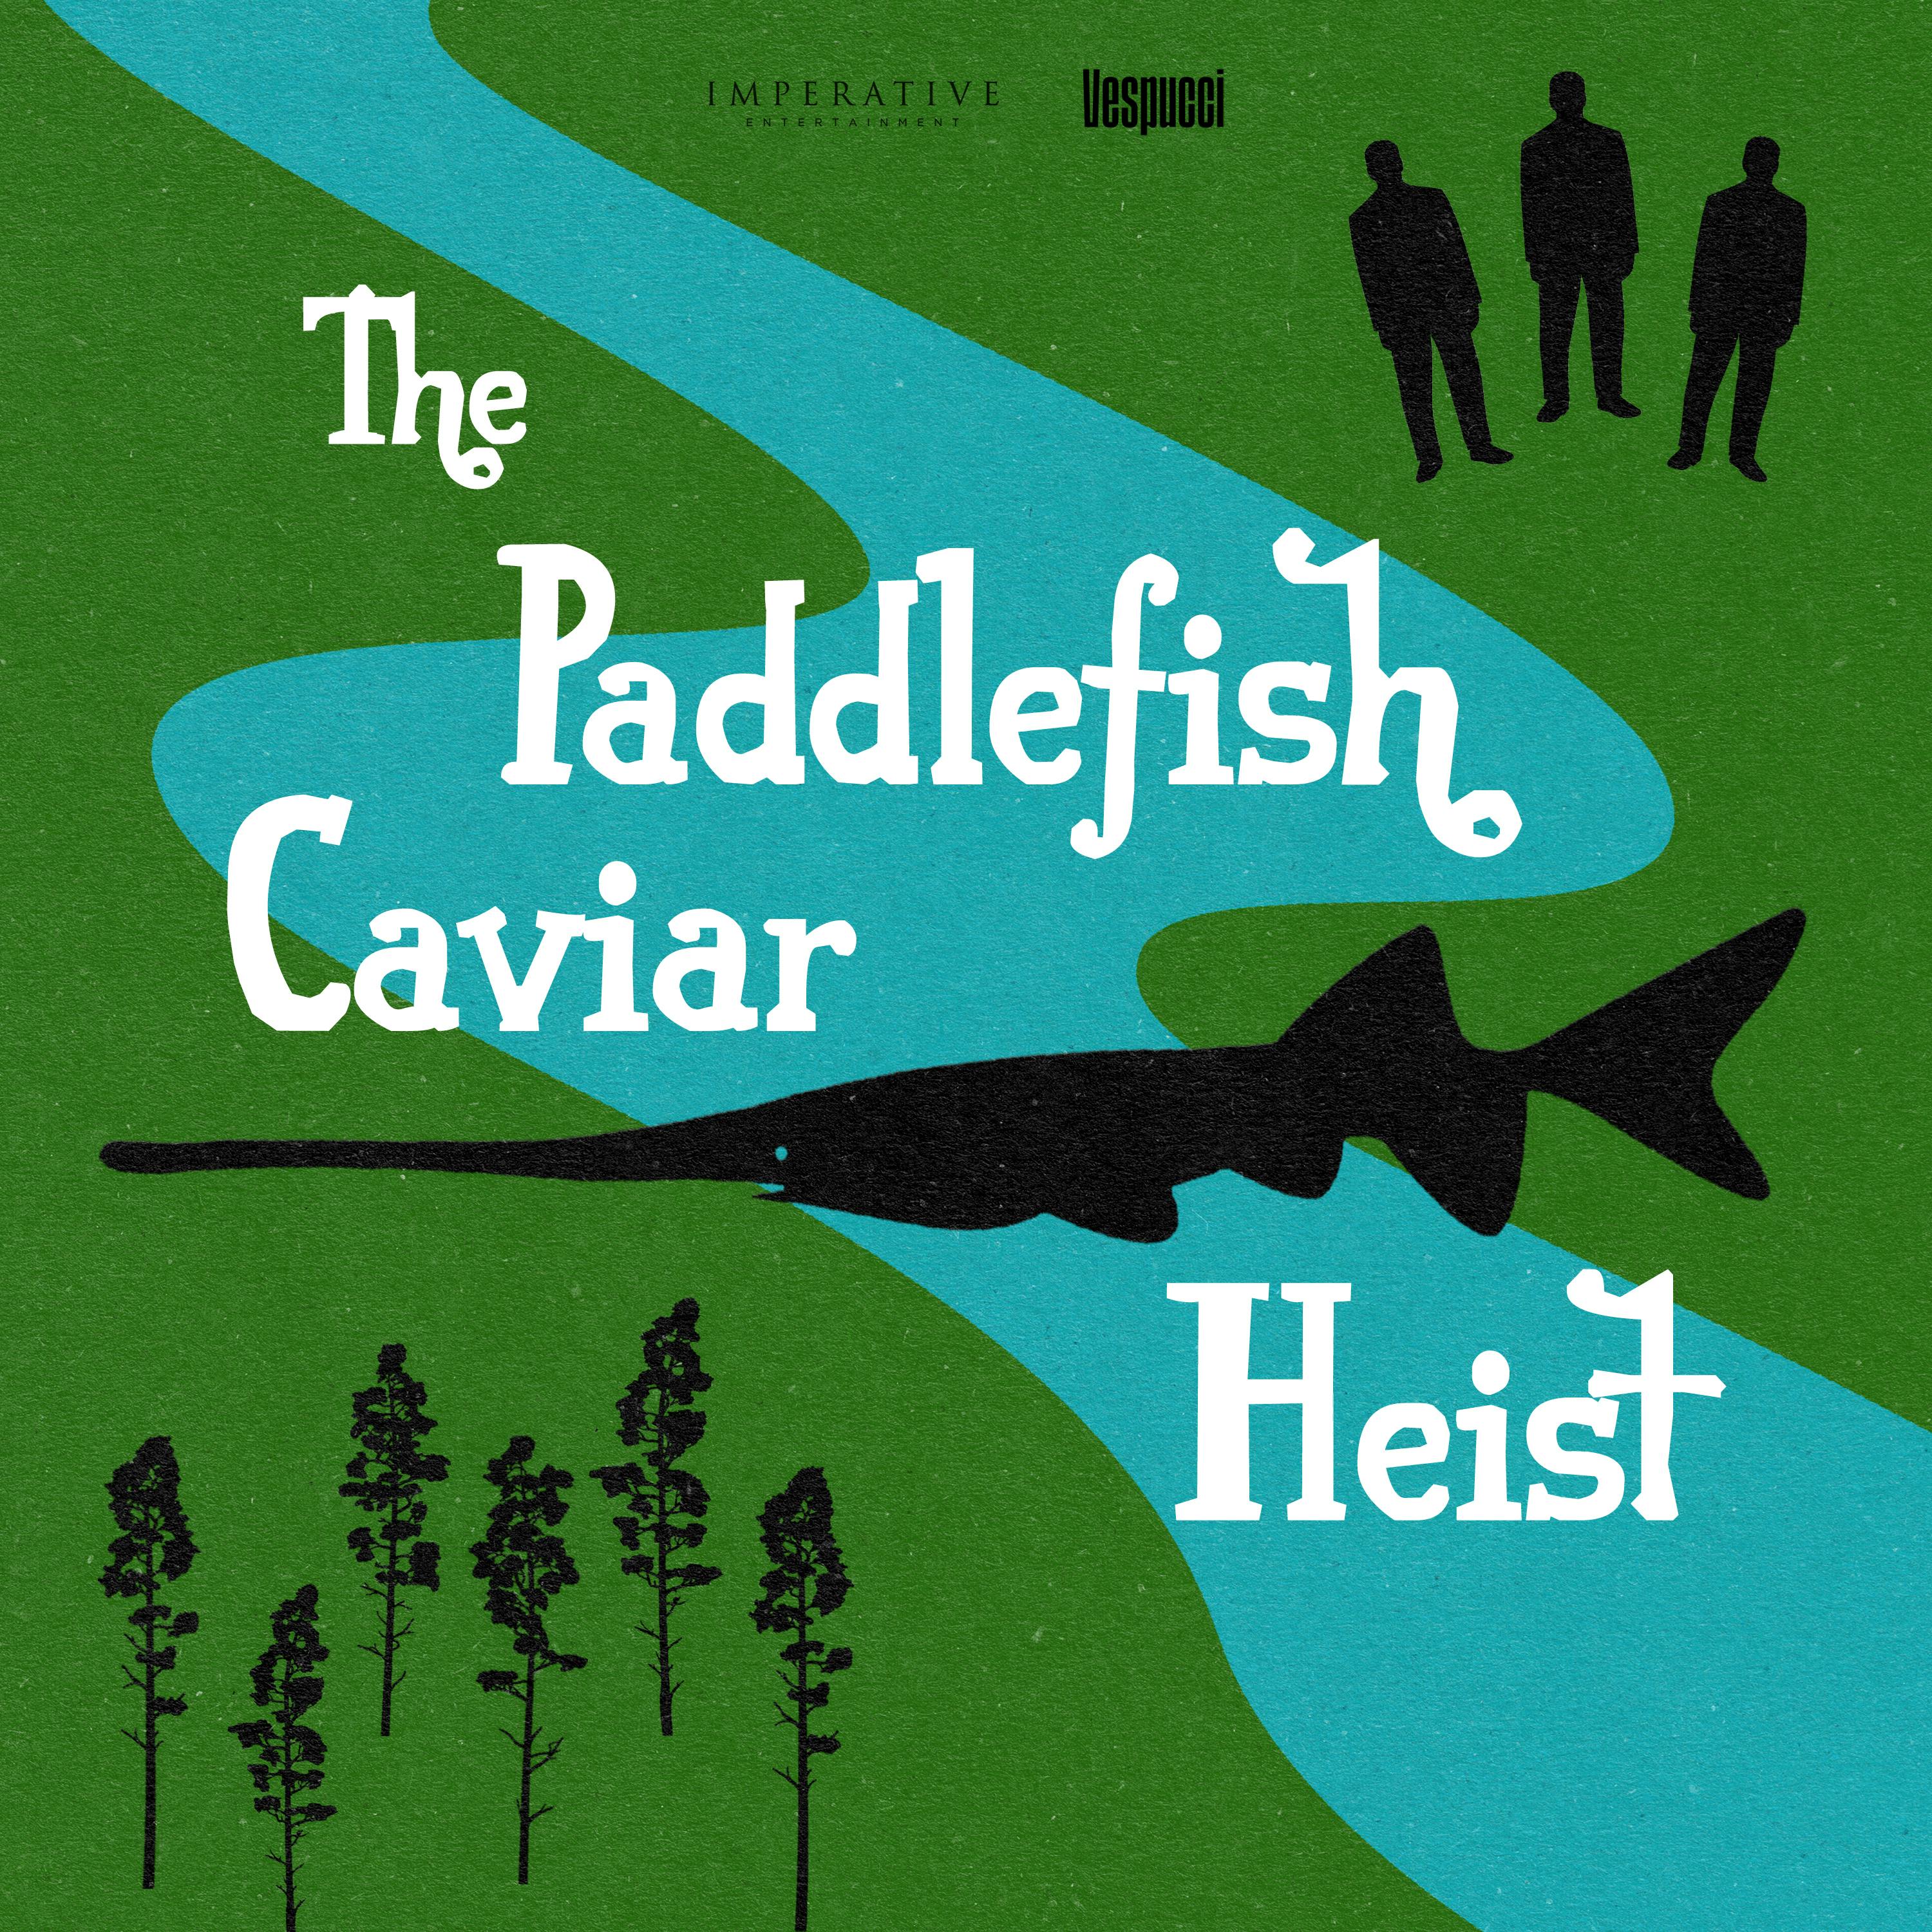 The Paddlefish Caviar Heist podcast show image